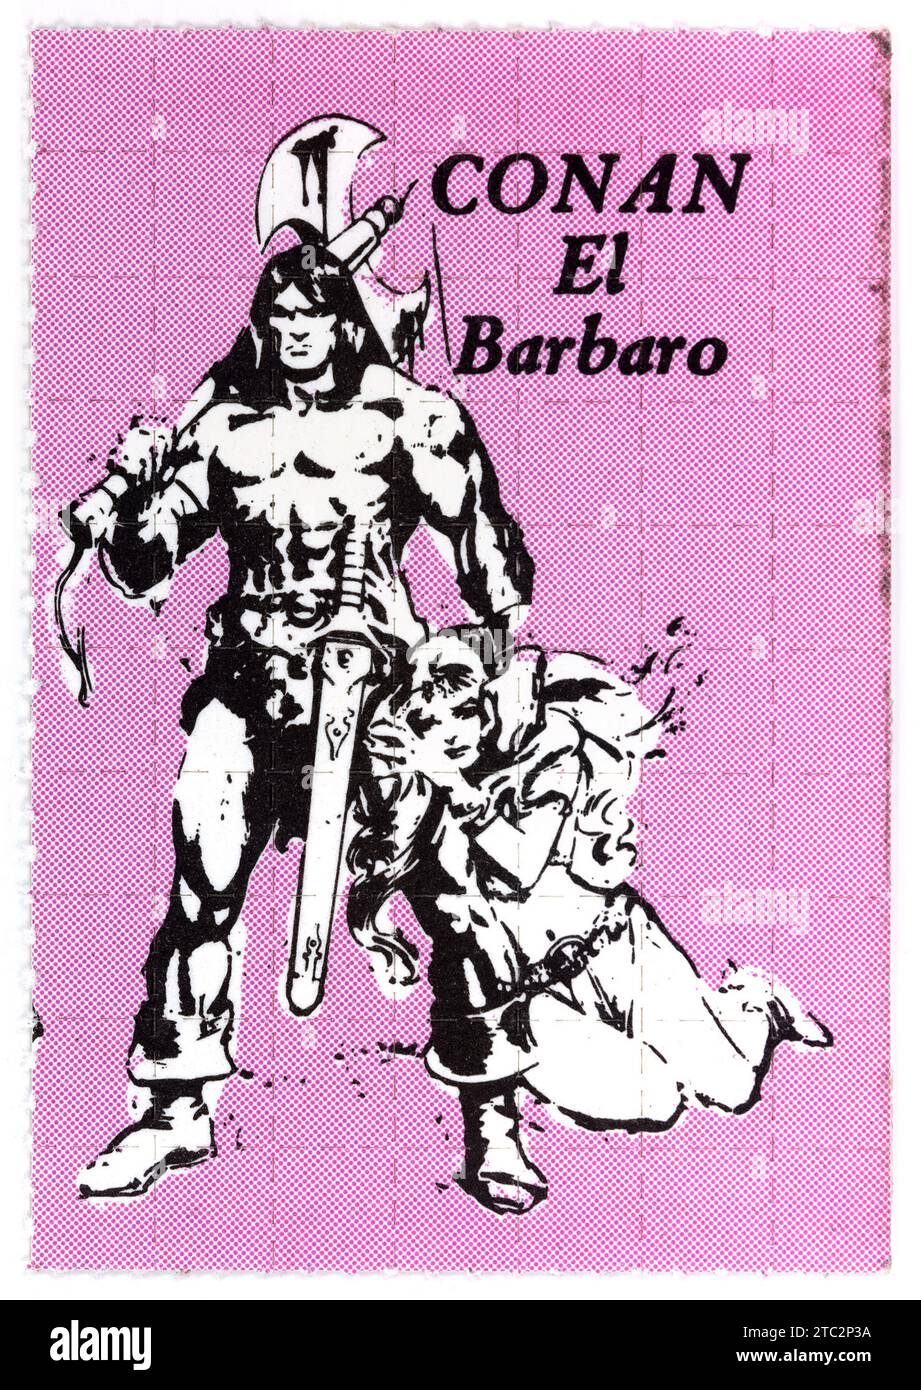 CONAN EL BARBARO [1981] BLOTTER ACID - LSD [Lysergic Acid Diethylamide] Stock Photo